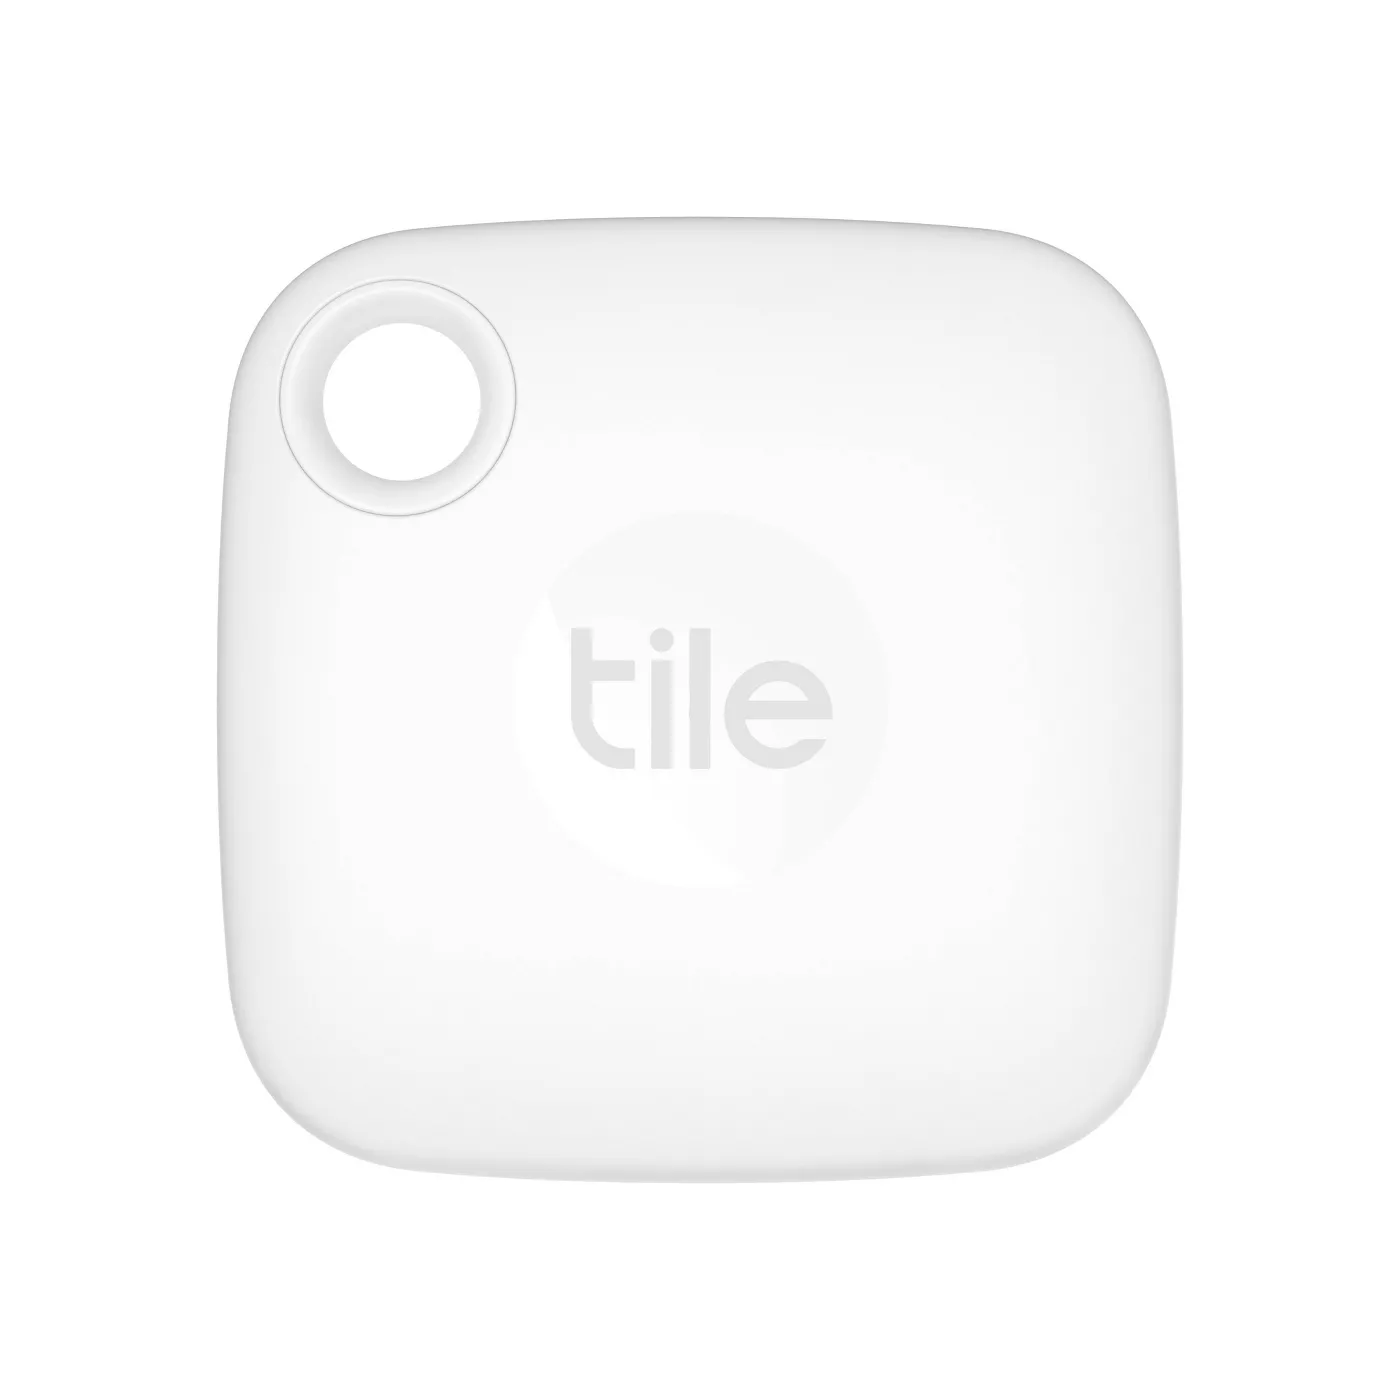 Tile Mate (2022) - White - image 1 of 5